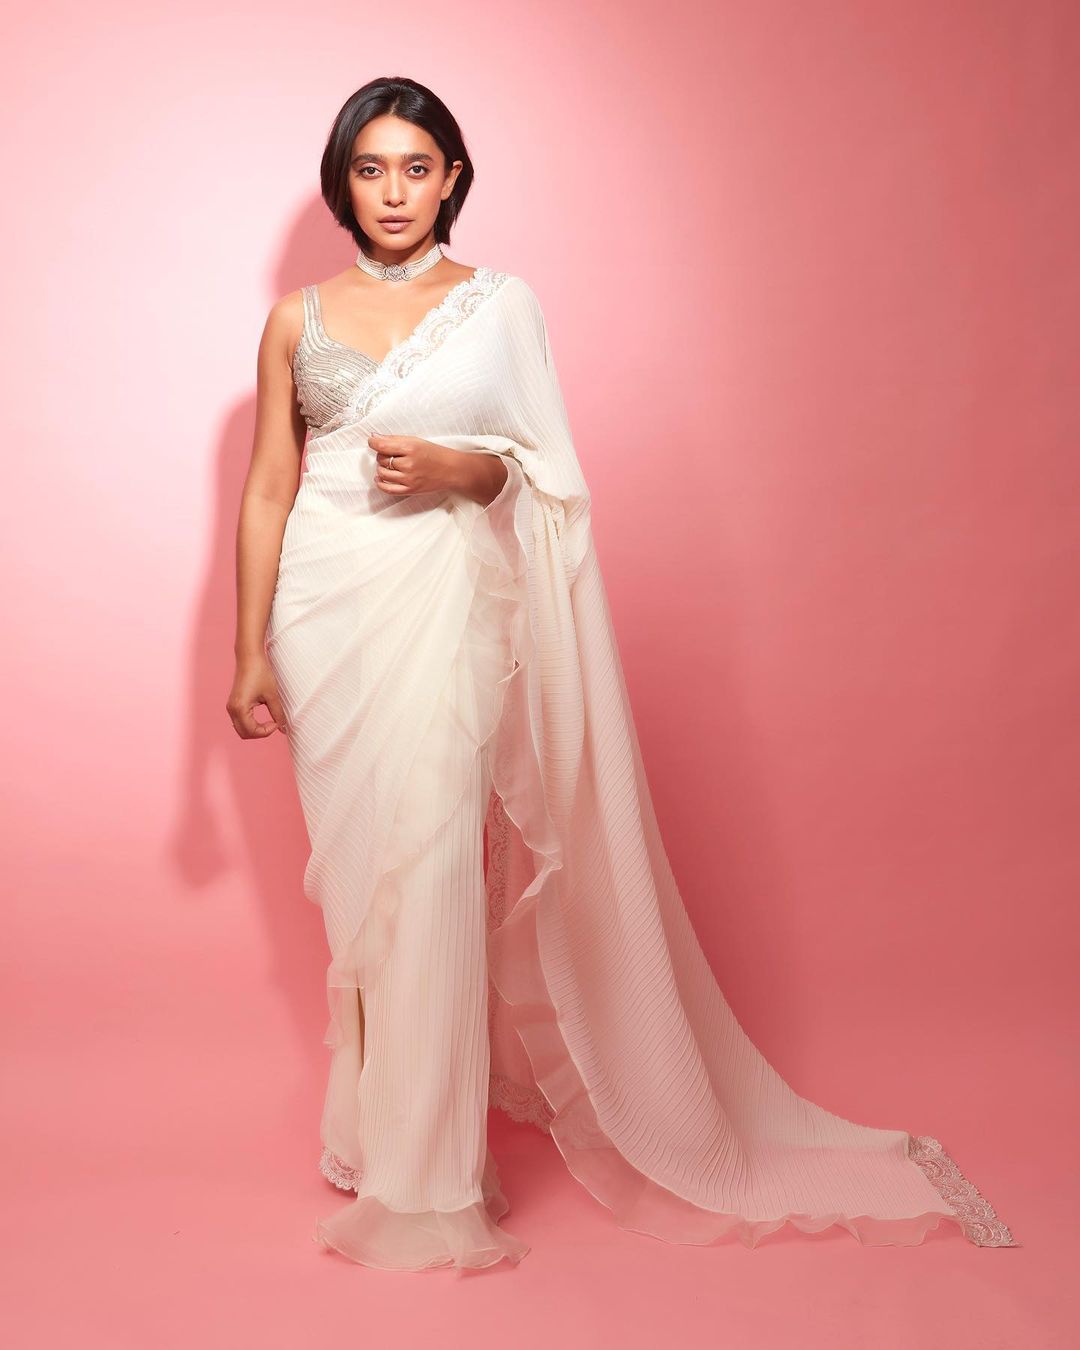 Sayani Gupta looks graceful in a plain white chiffon saree